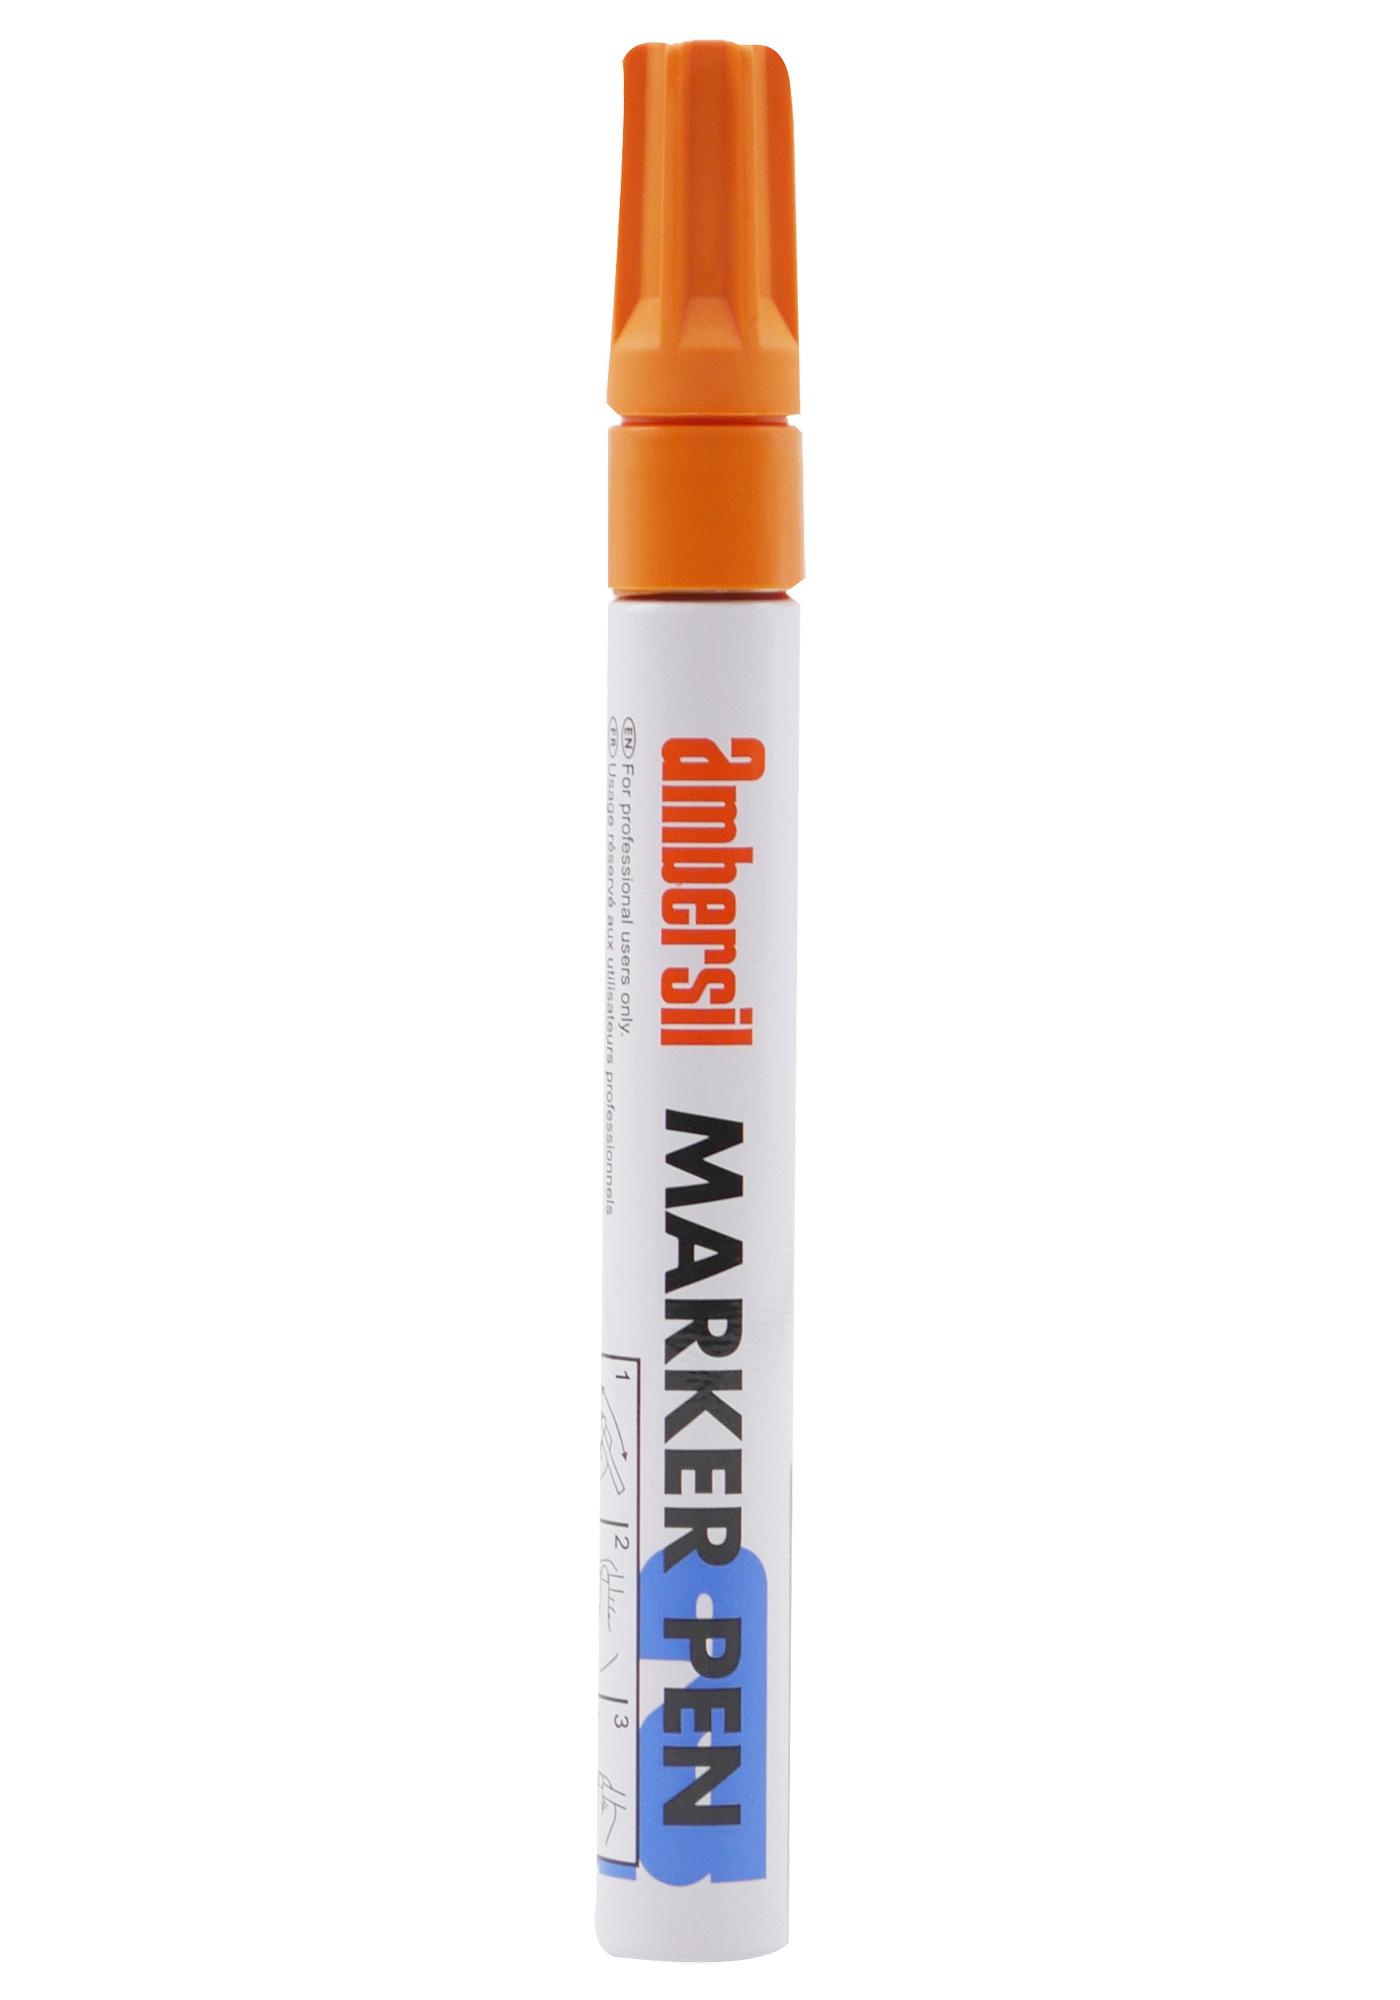 Ambersil Marker Pen Orange, 3mm Coating, Paint, Pen, Orange, 0.0215G